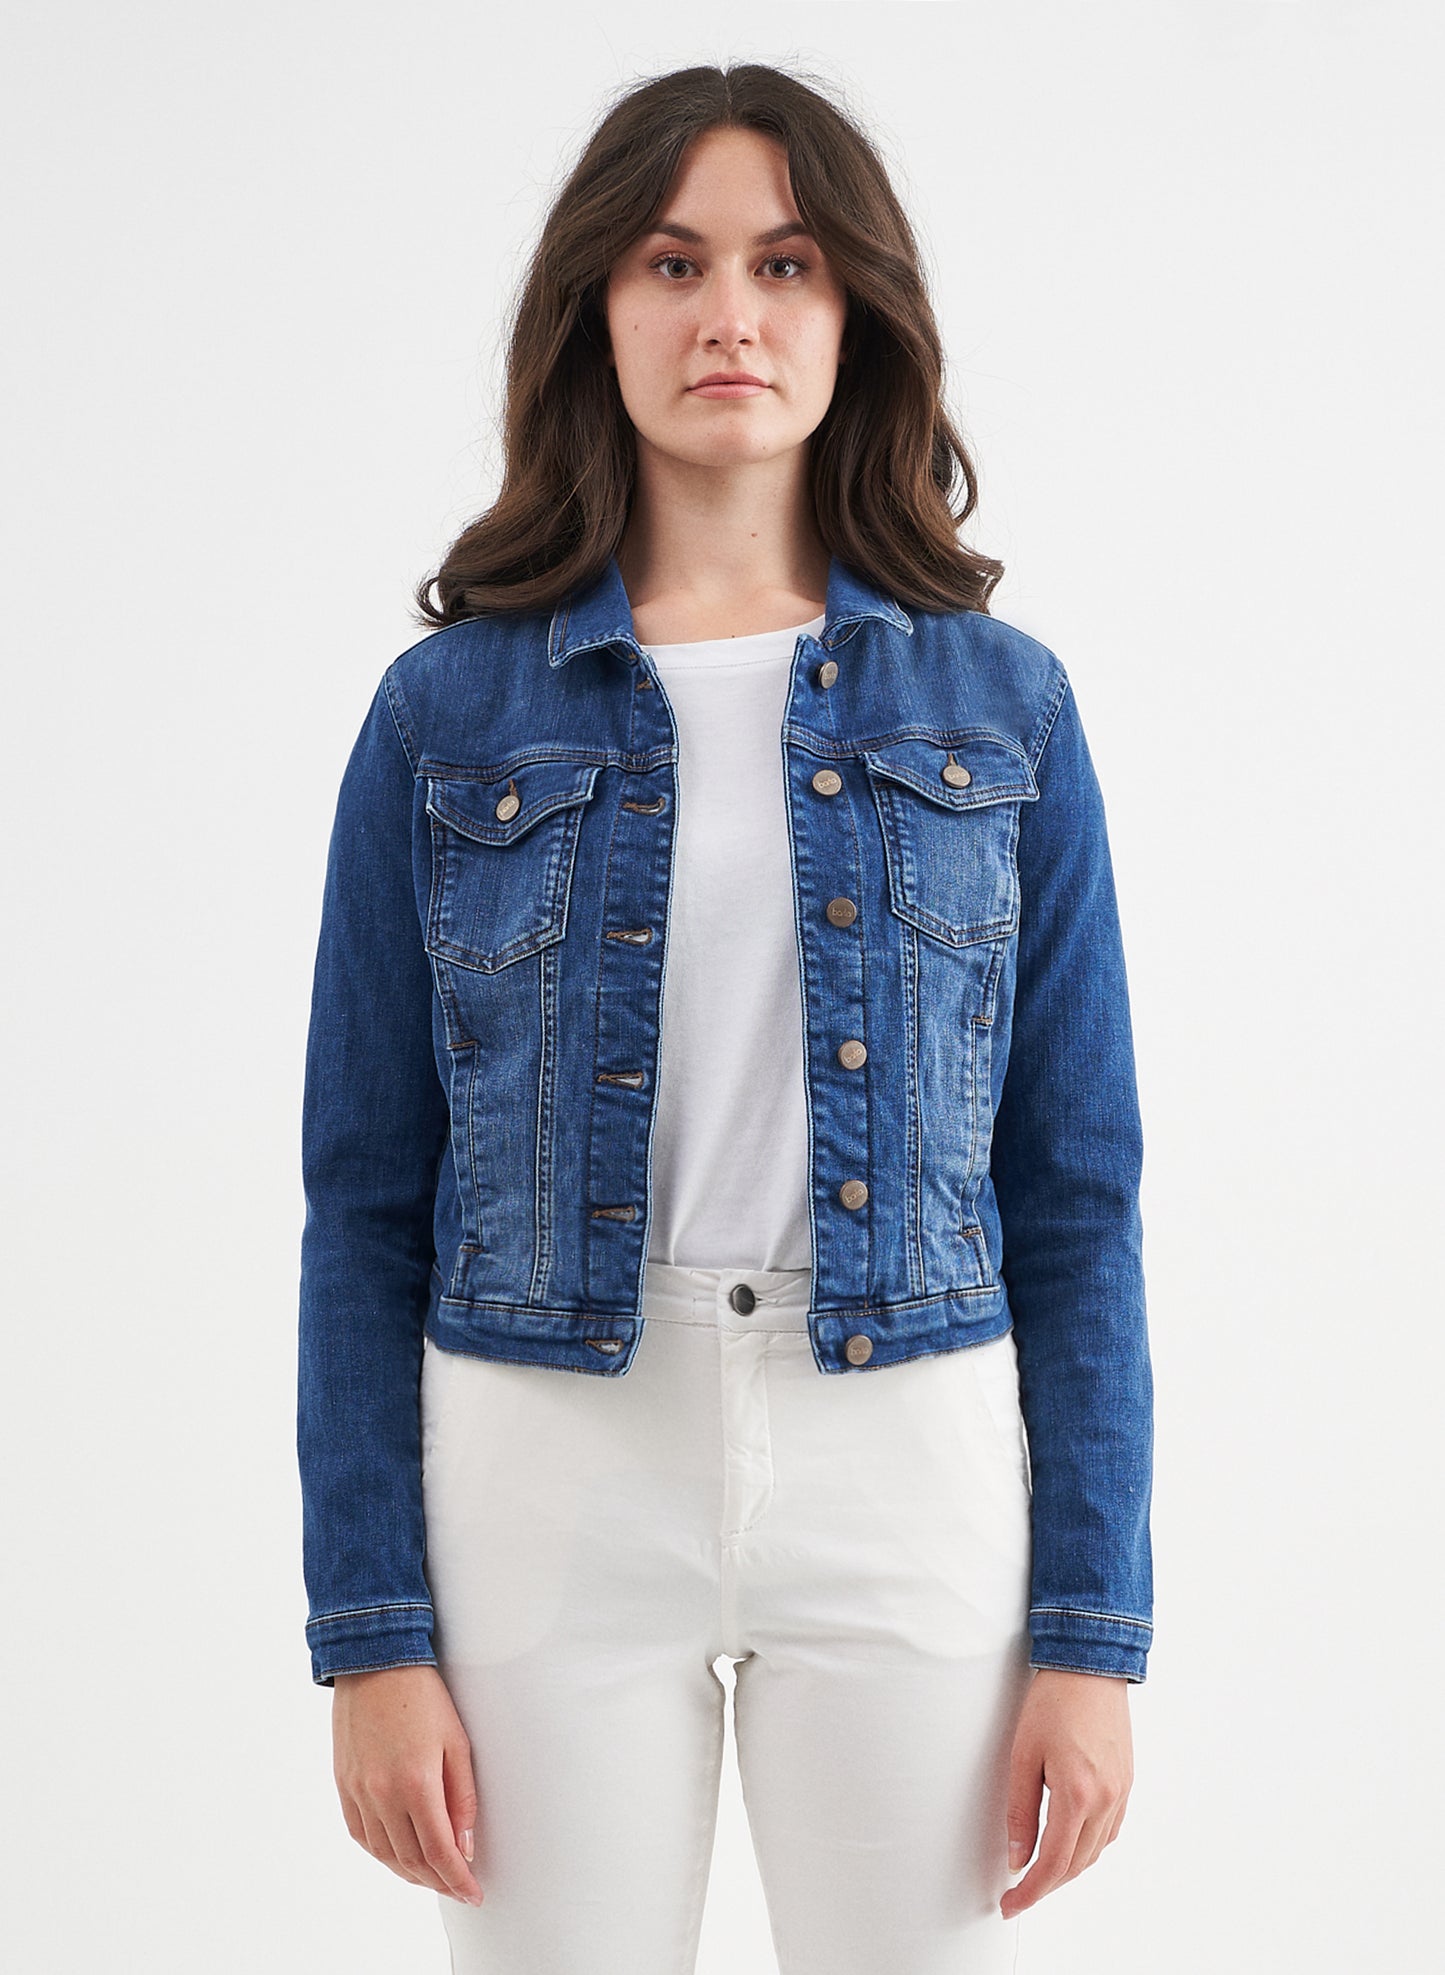 JENNA - Classic Denim Jeans Jacket - Mid Blue